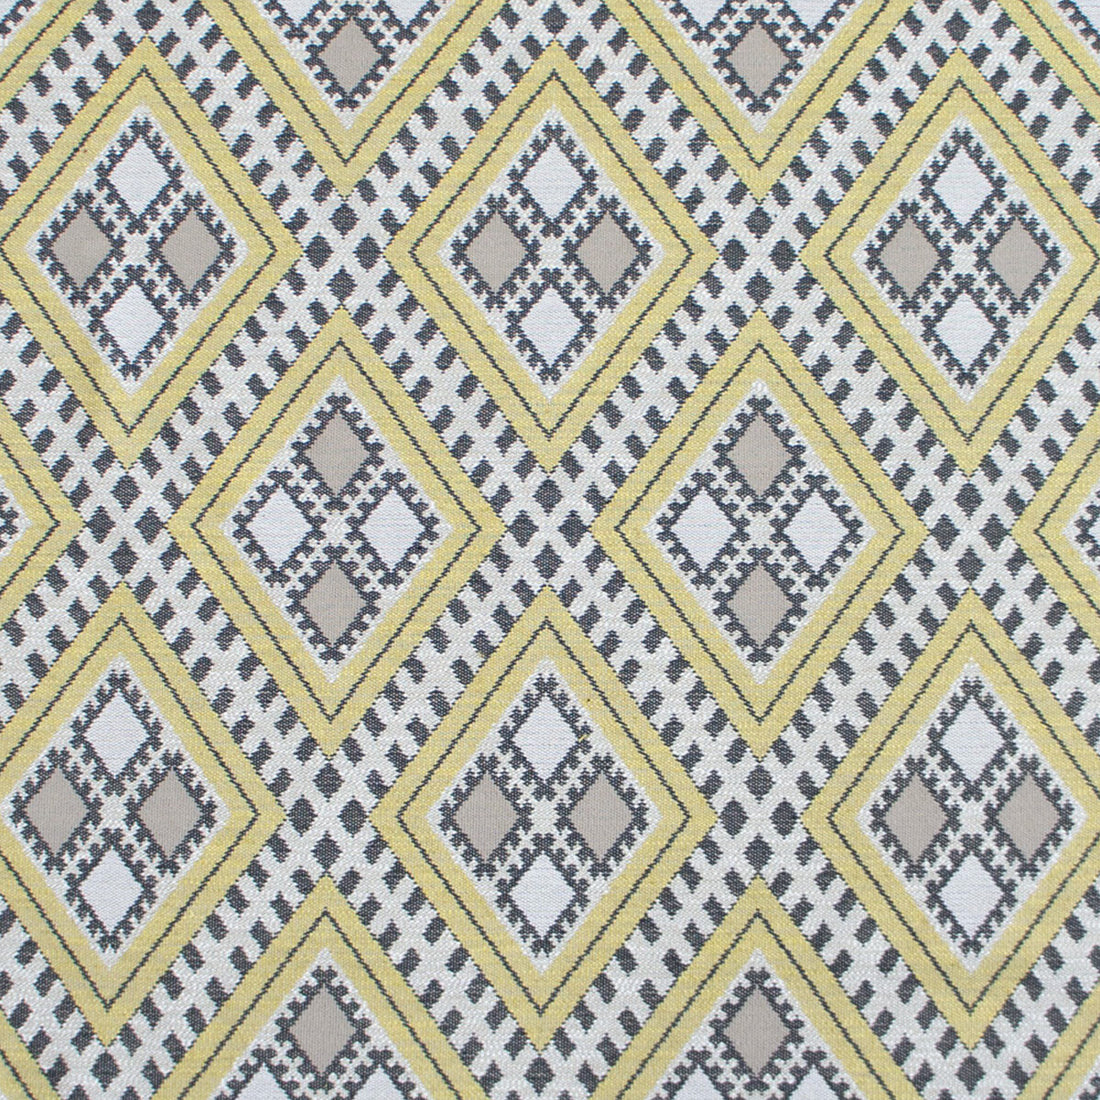 Chihuahua fabric in amarillo color - pattern GDT5656.001.0 - by Gaston y Daniela in the Gaston Rio Grande collection